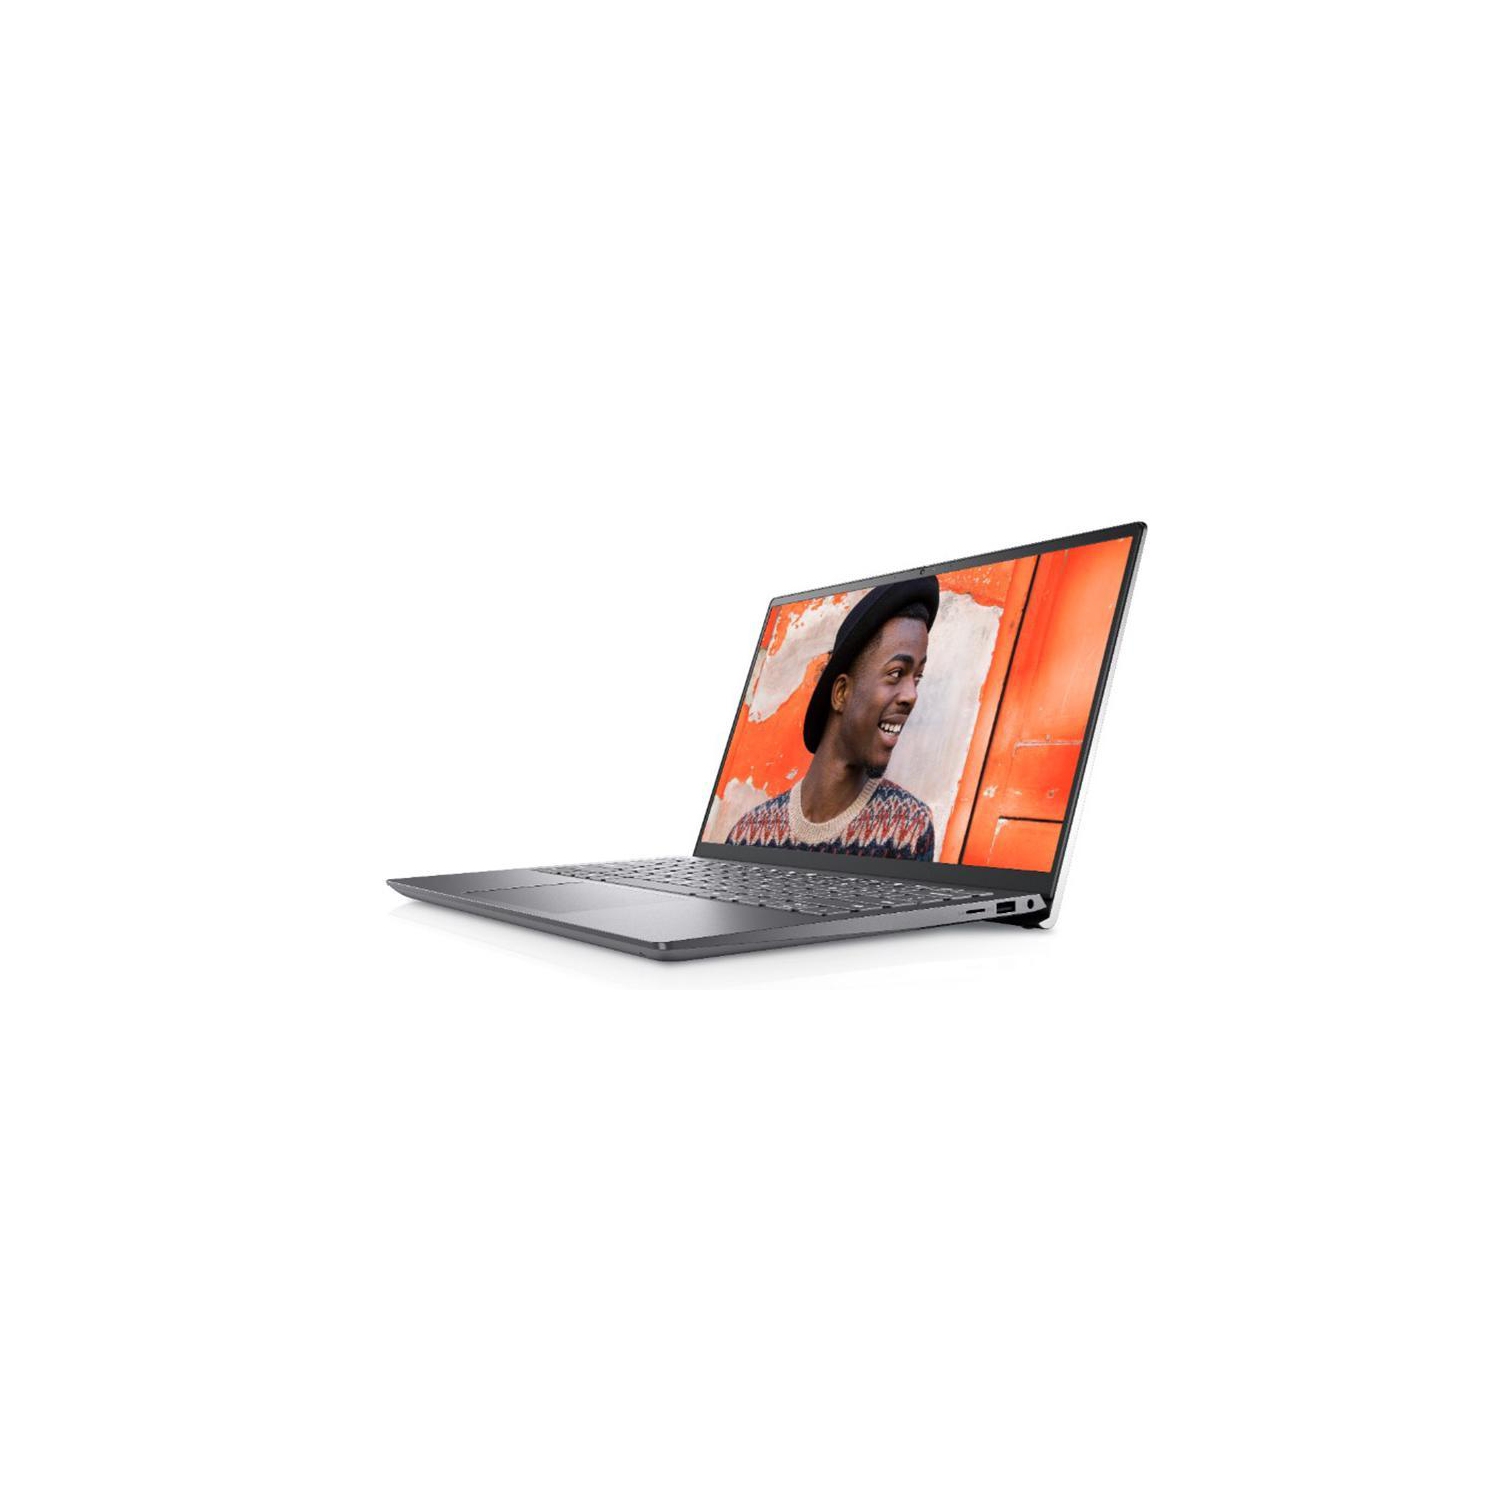 Refurbished (Good) - Dell Inspiron 5410 Laptop, Intel Core i5 